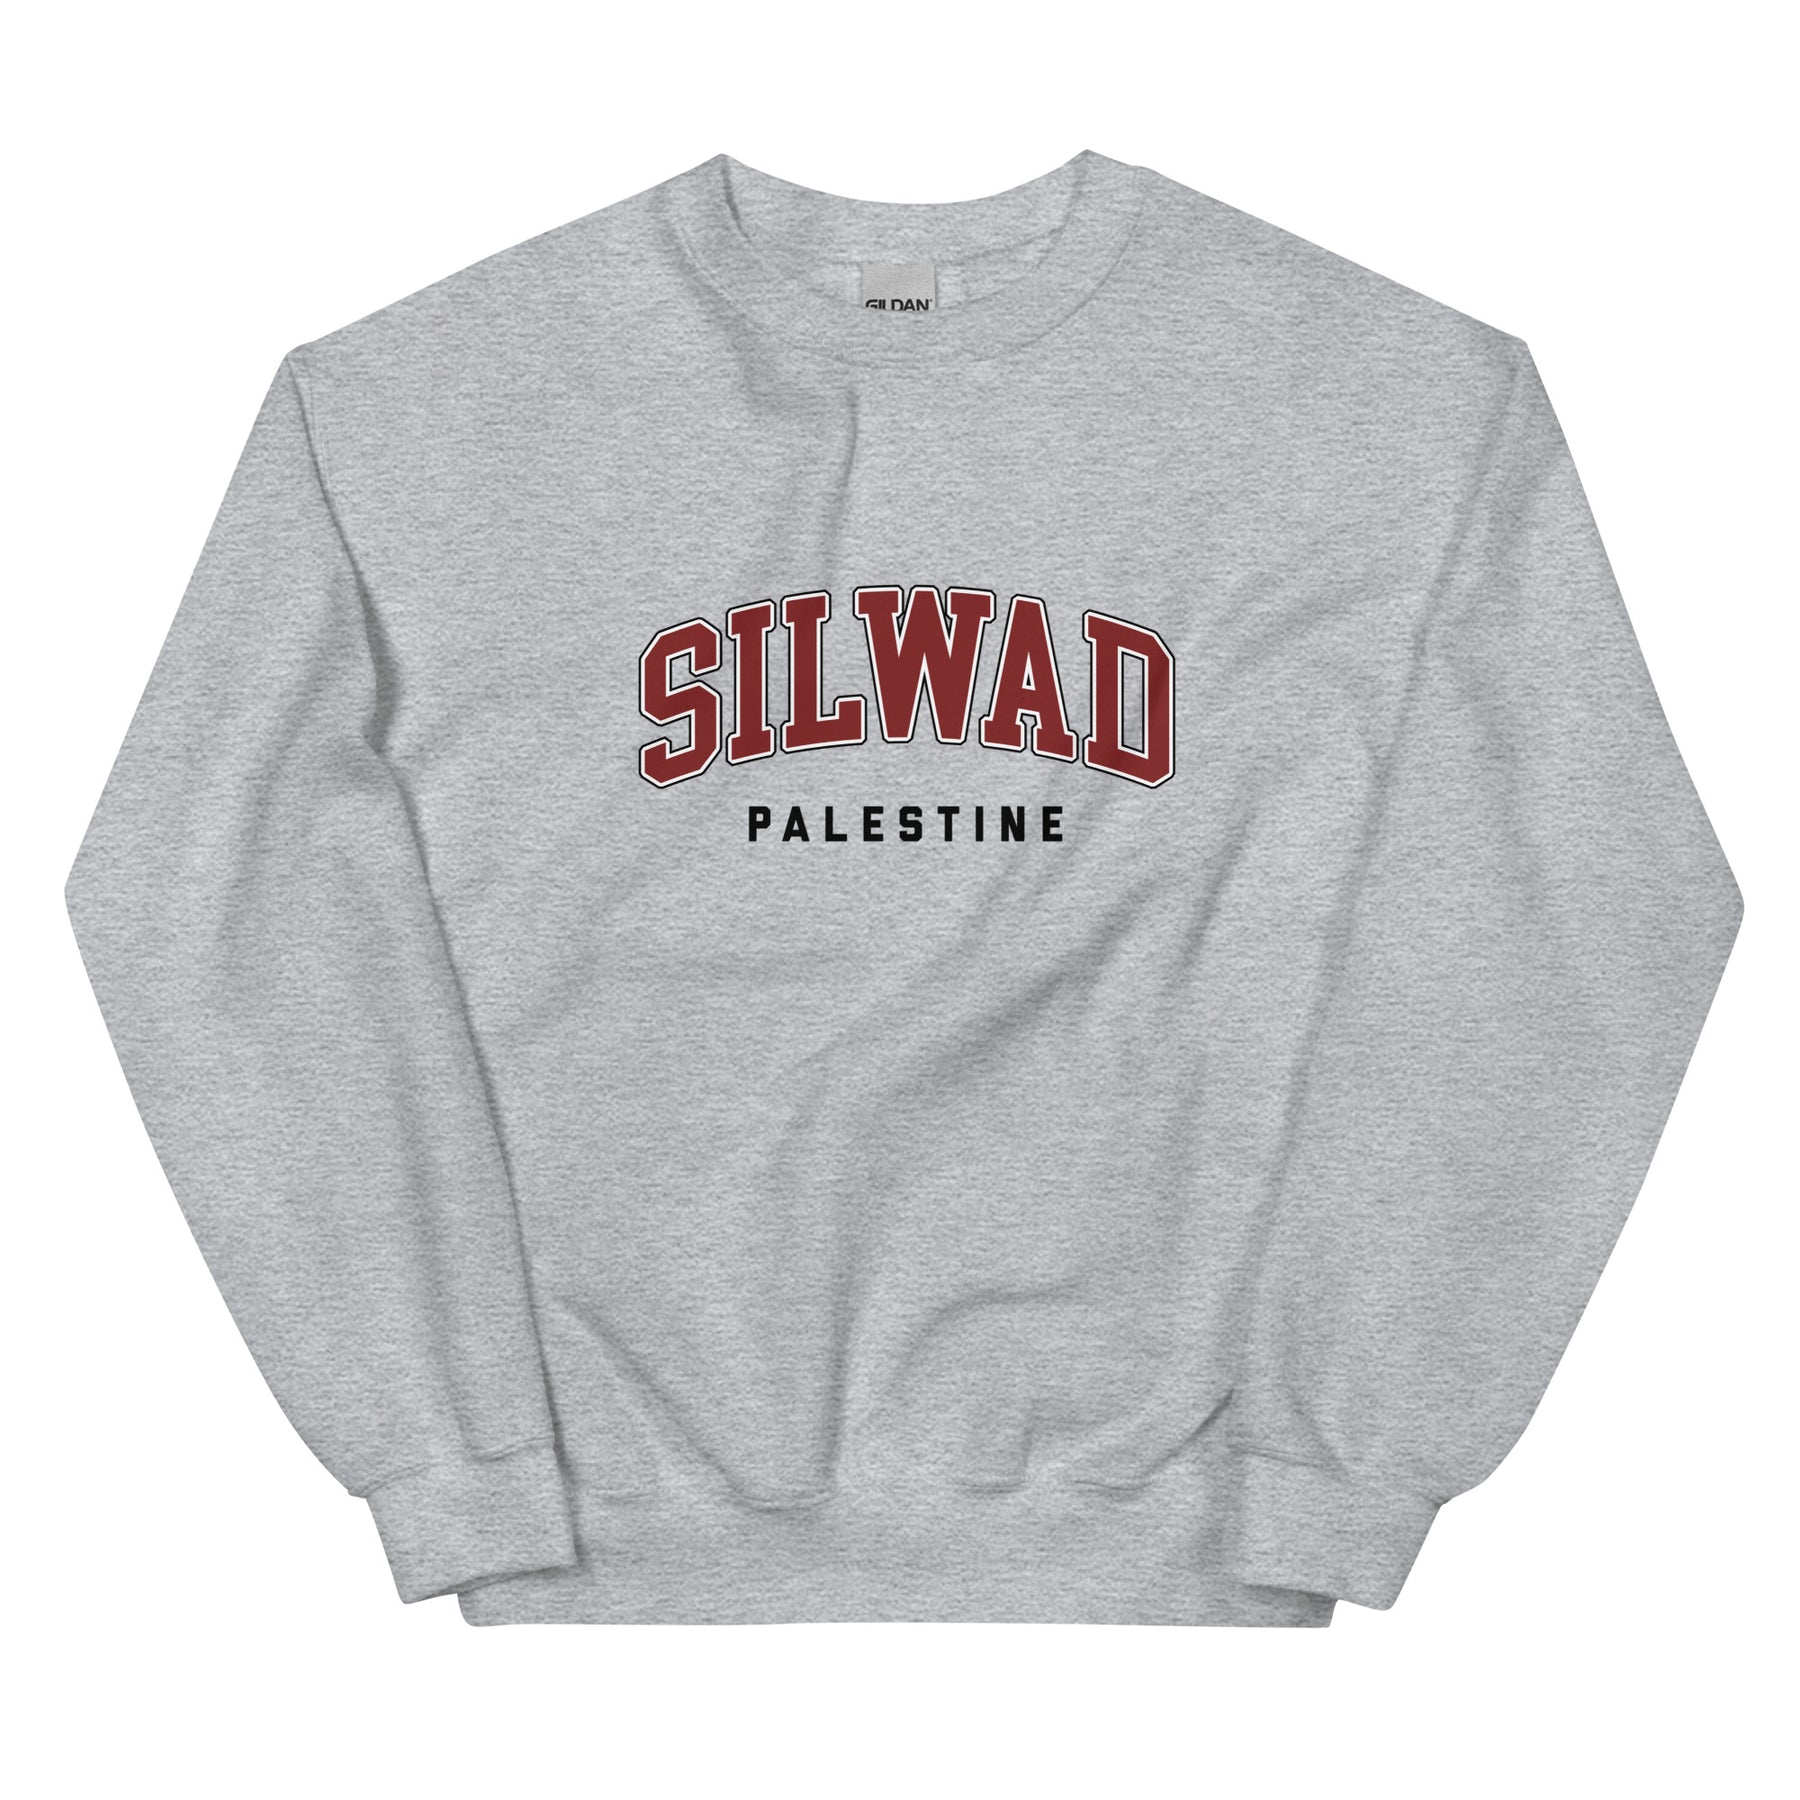 Silwad, Palestine - Sweatshirt